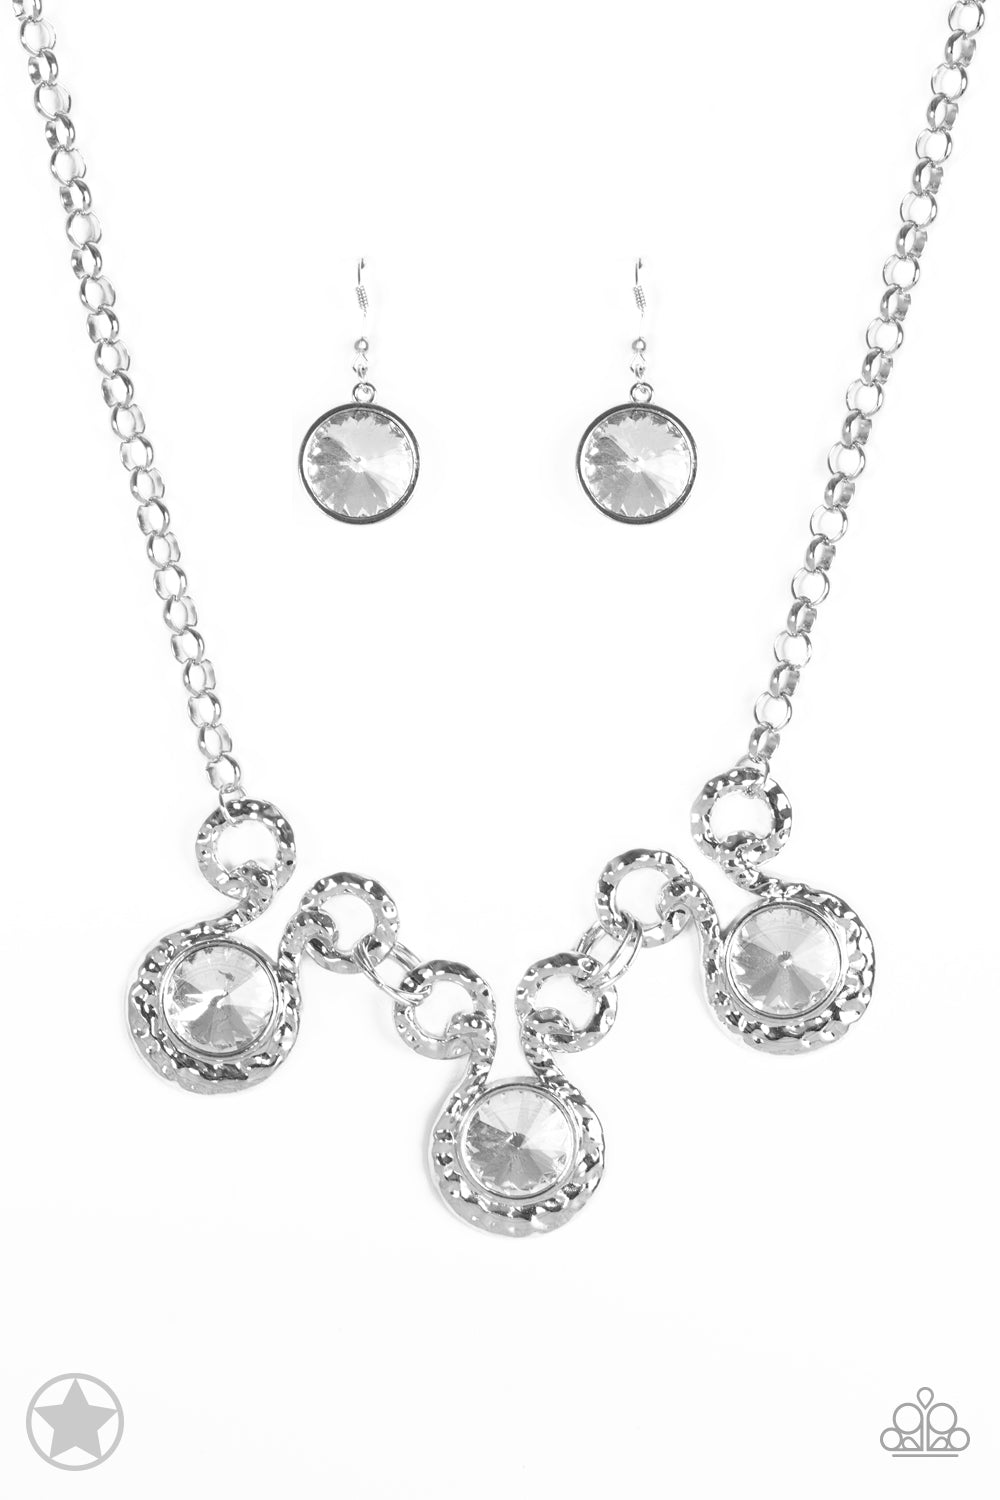 Hypnotized Silver Paparazzi Necklaces Cashmere Pink Jewels - Cashmere Pink Jewels & Accessories, Cashmere Pink Jewels & Accessories - Paparazzi